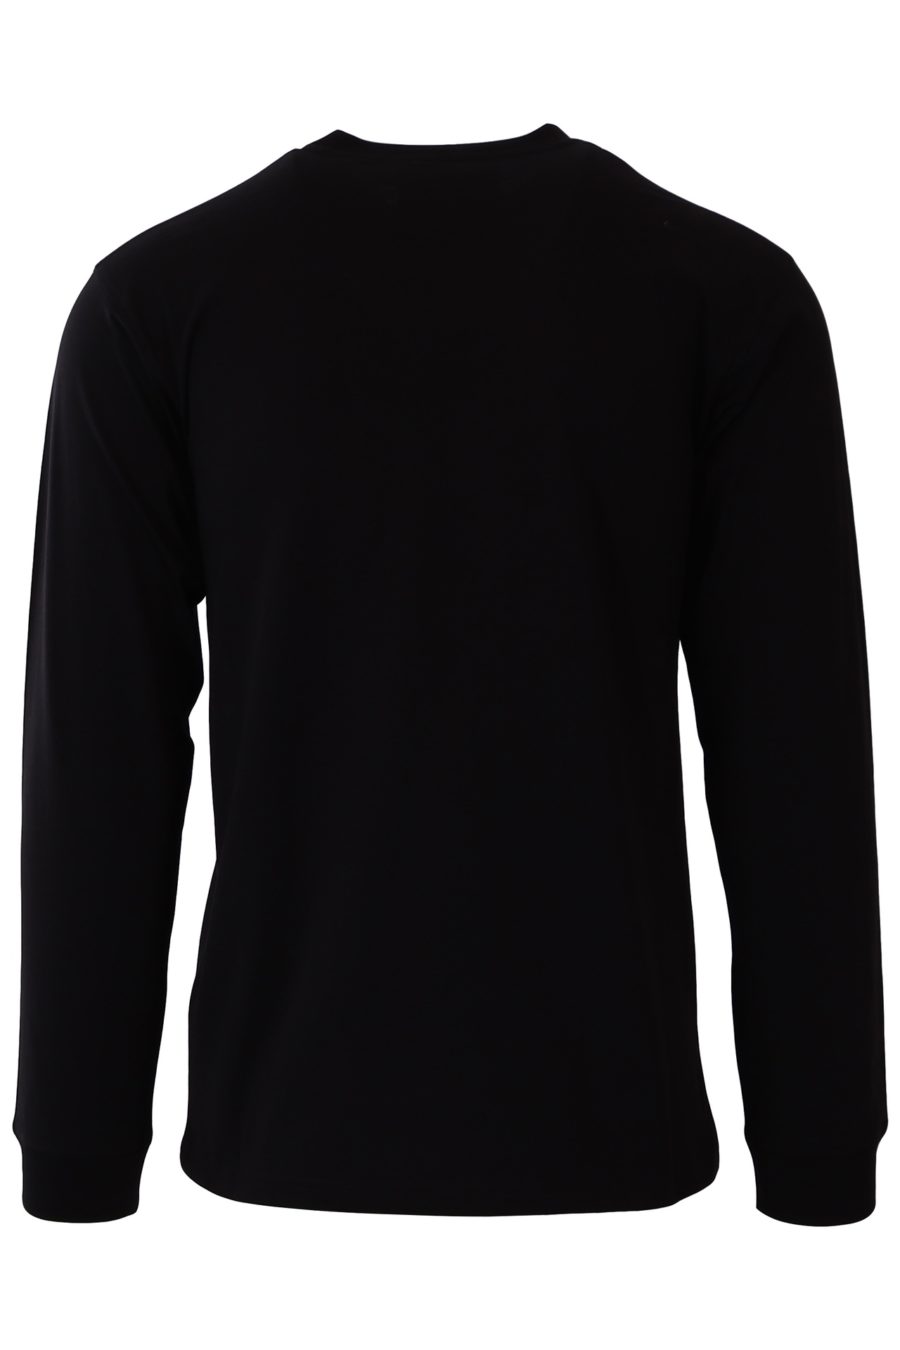 Moschino Couture black long sleeve T-shirt with logo - dc4f9773183c87902cc023ba984dc38bcc31325b